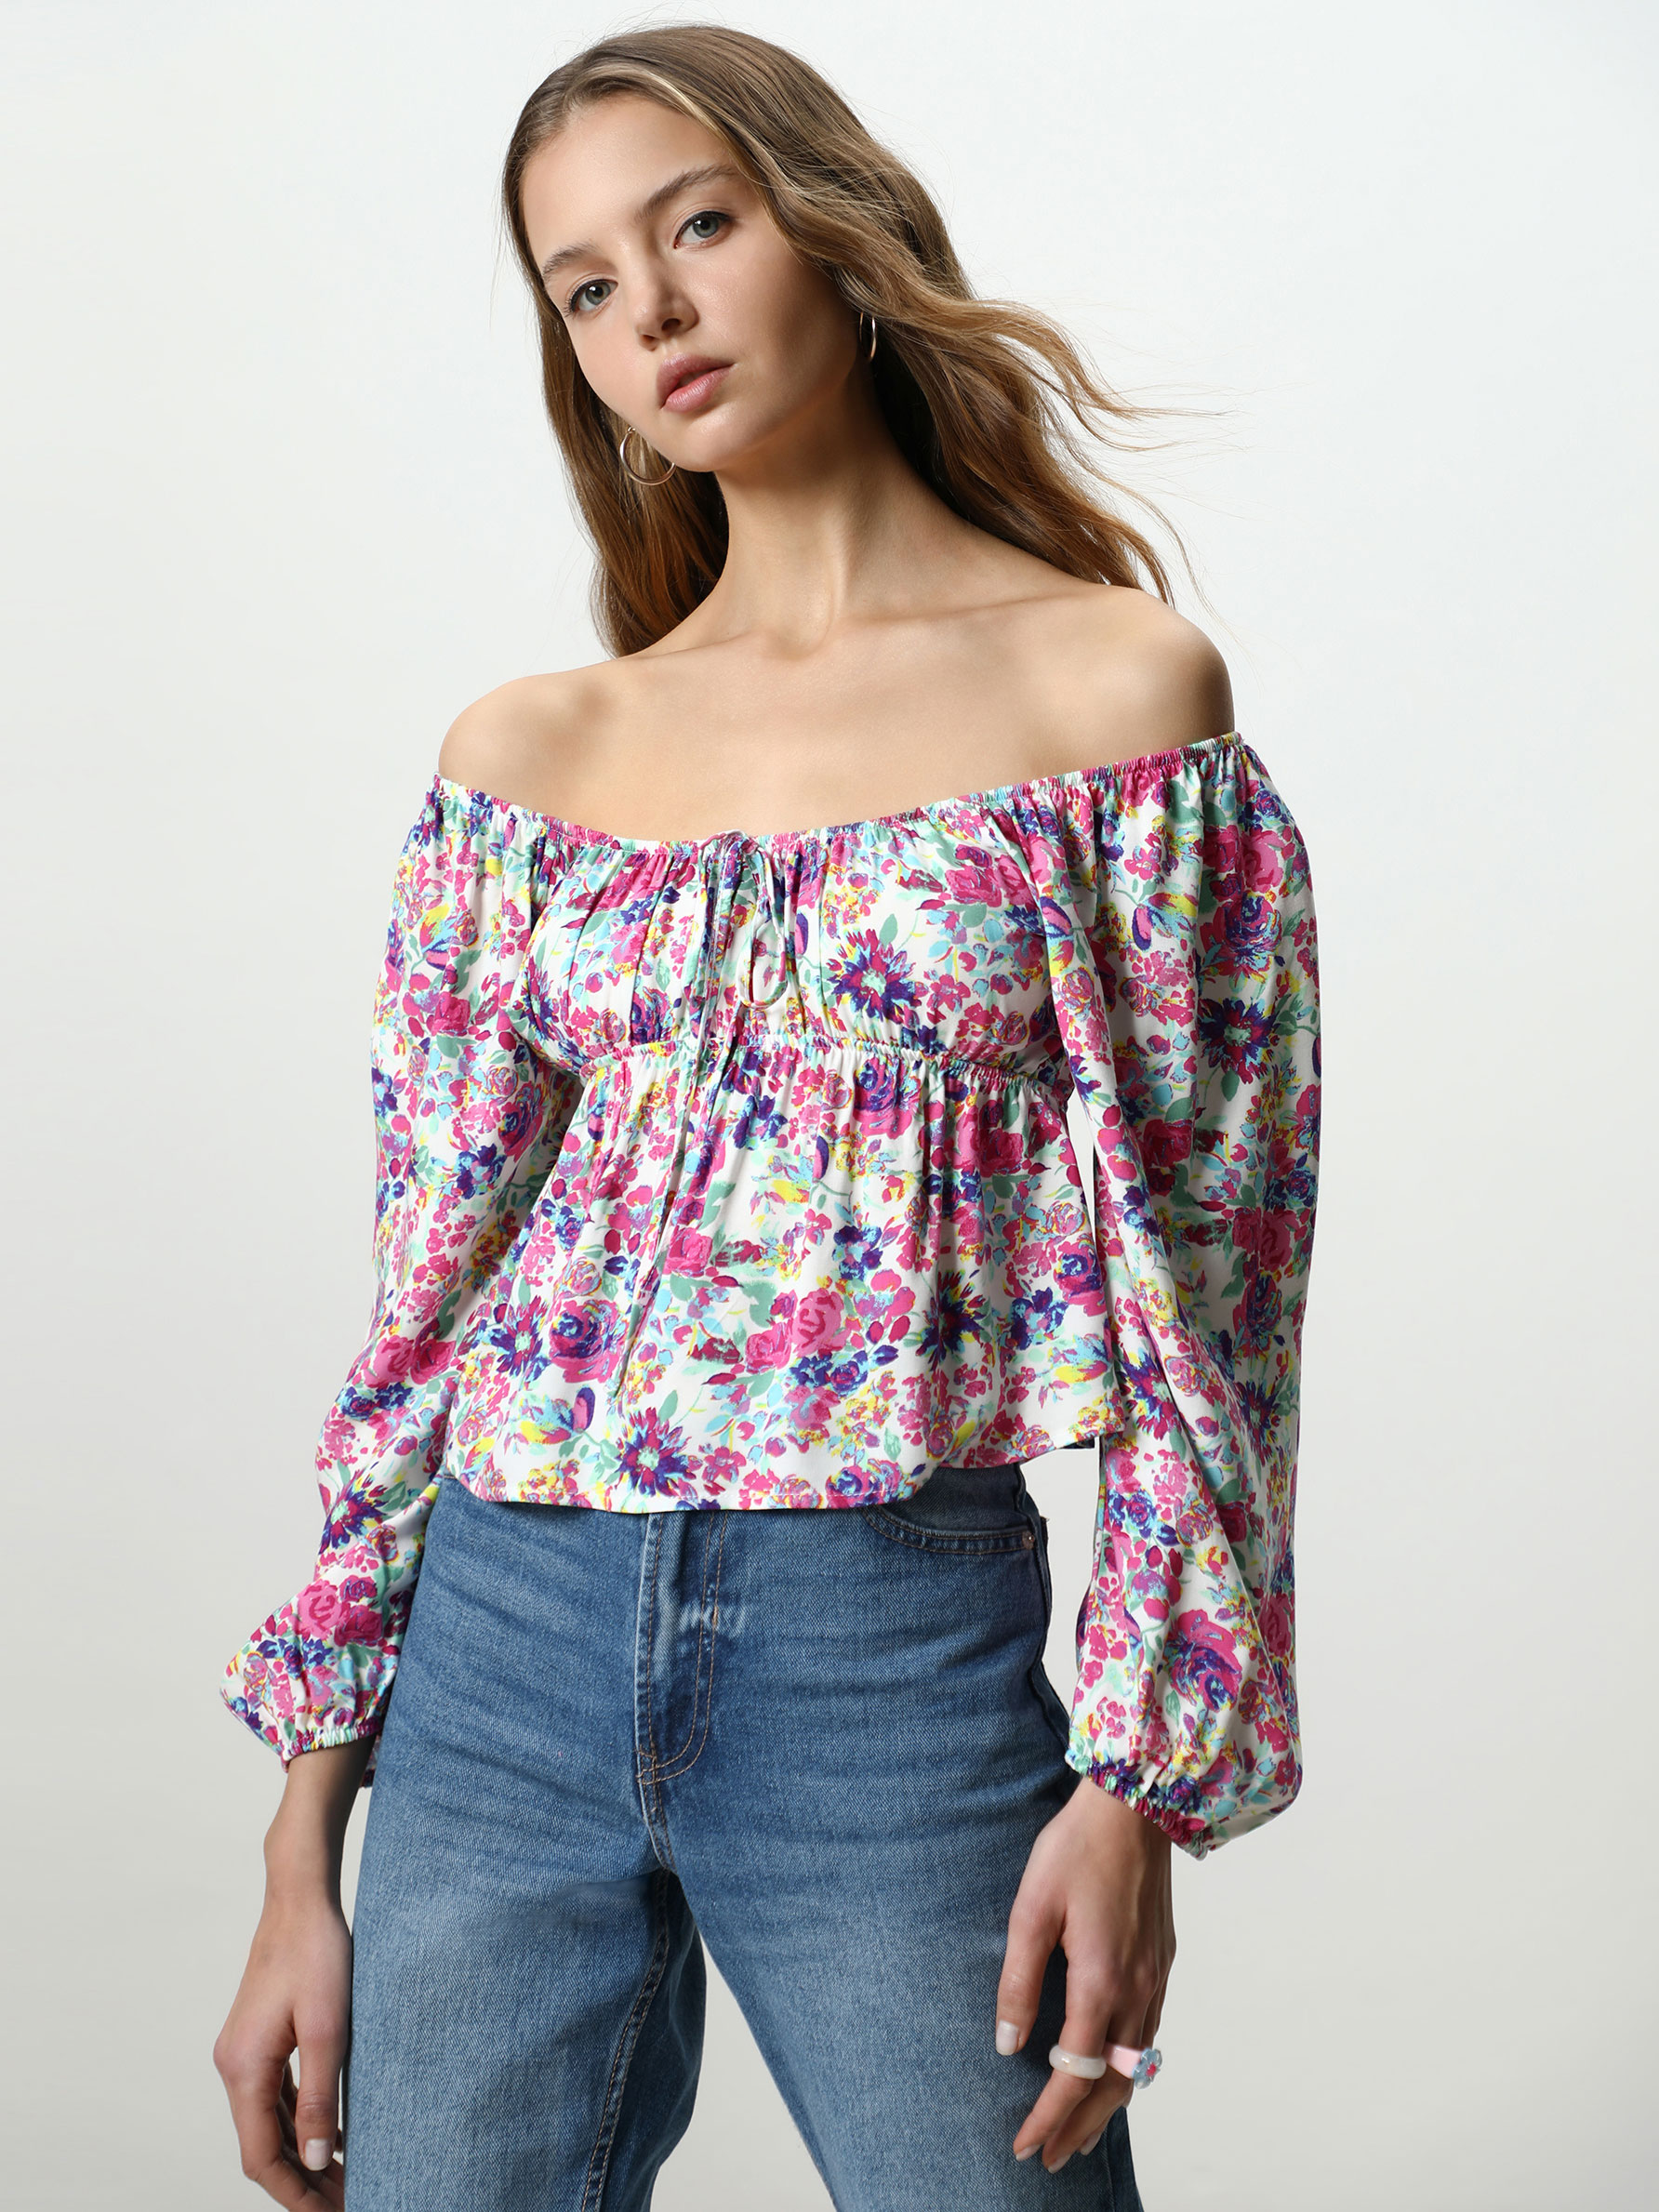 Vogue Women Lady Long Sleeve Asymmetric Print Floral Occident Tops Shirt Blouses